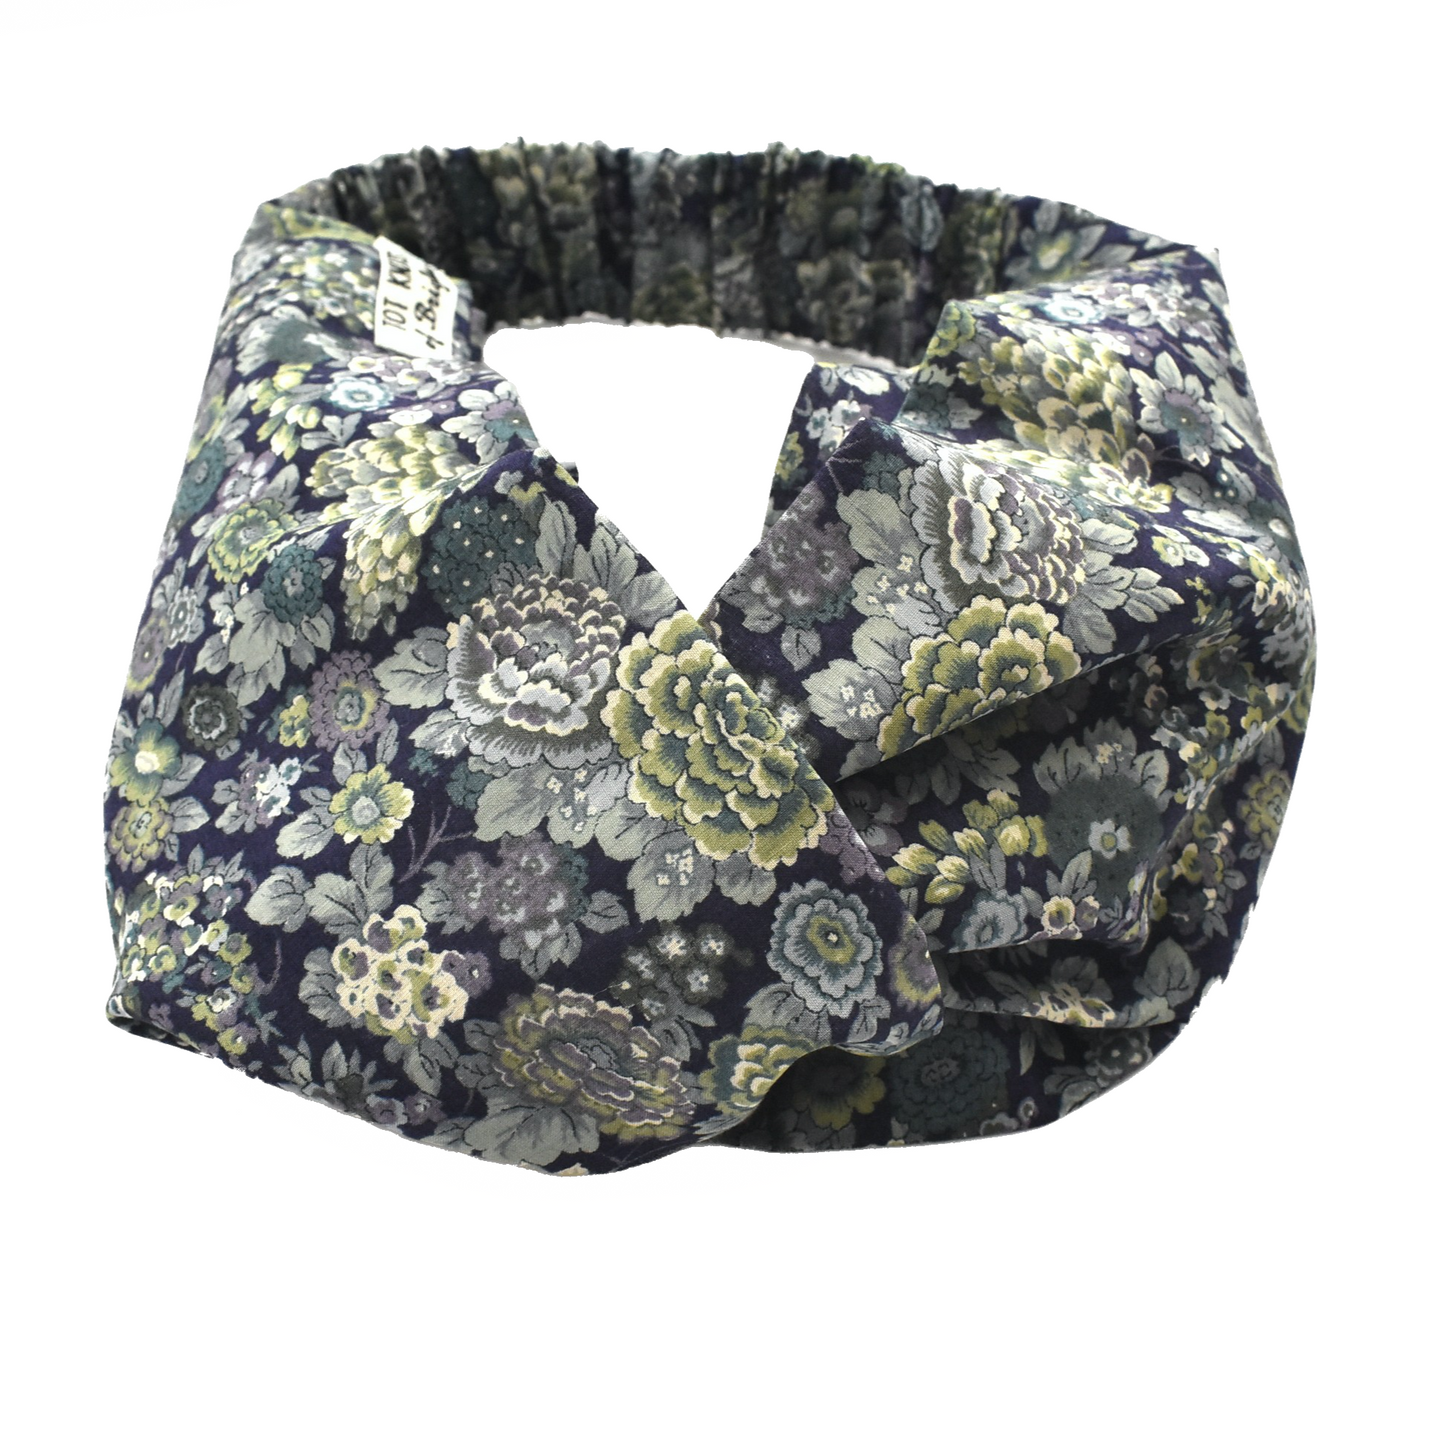 Twisted Turban Headband - Liberty of London Elysian Blue Floral print